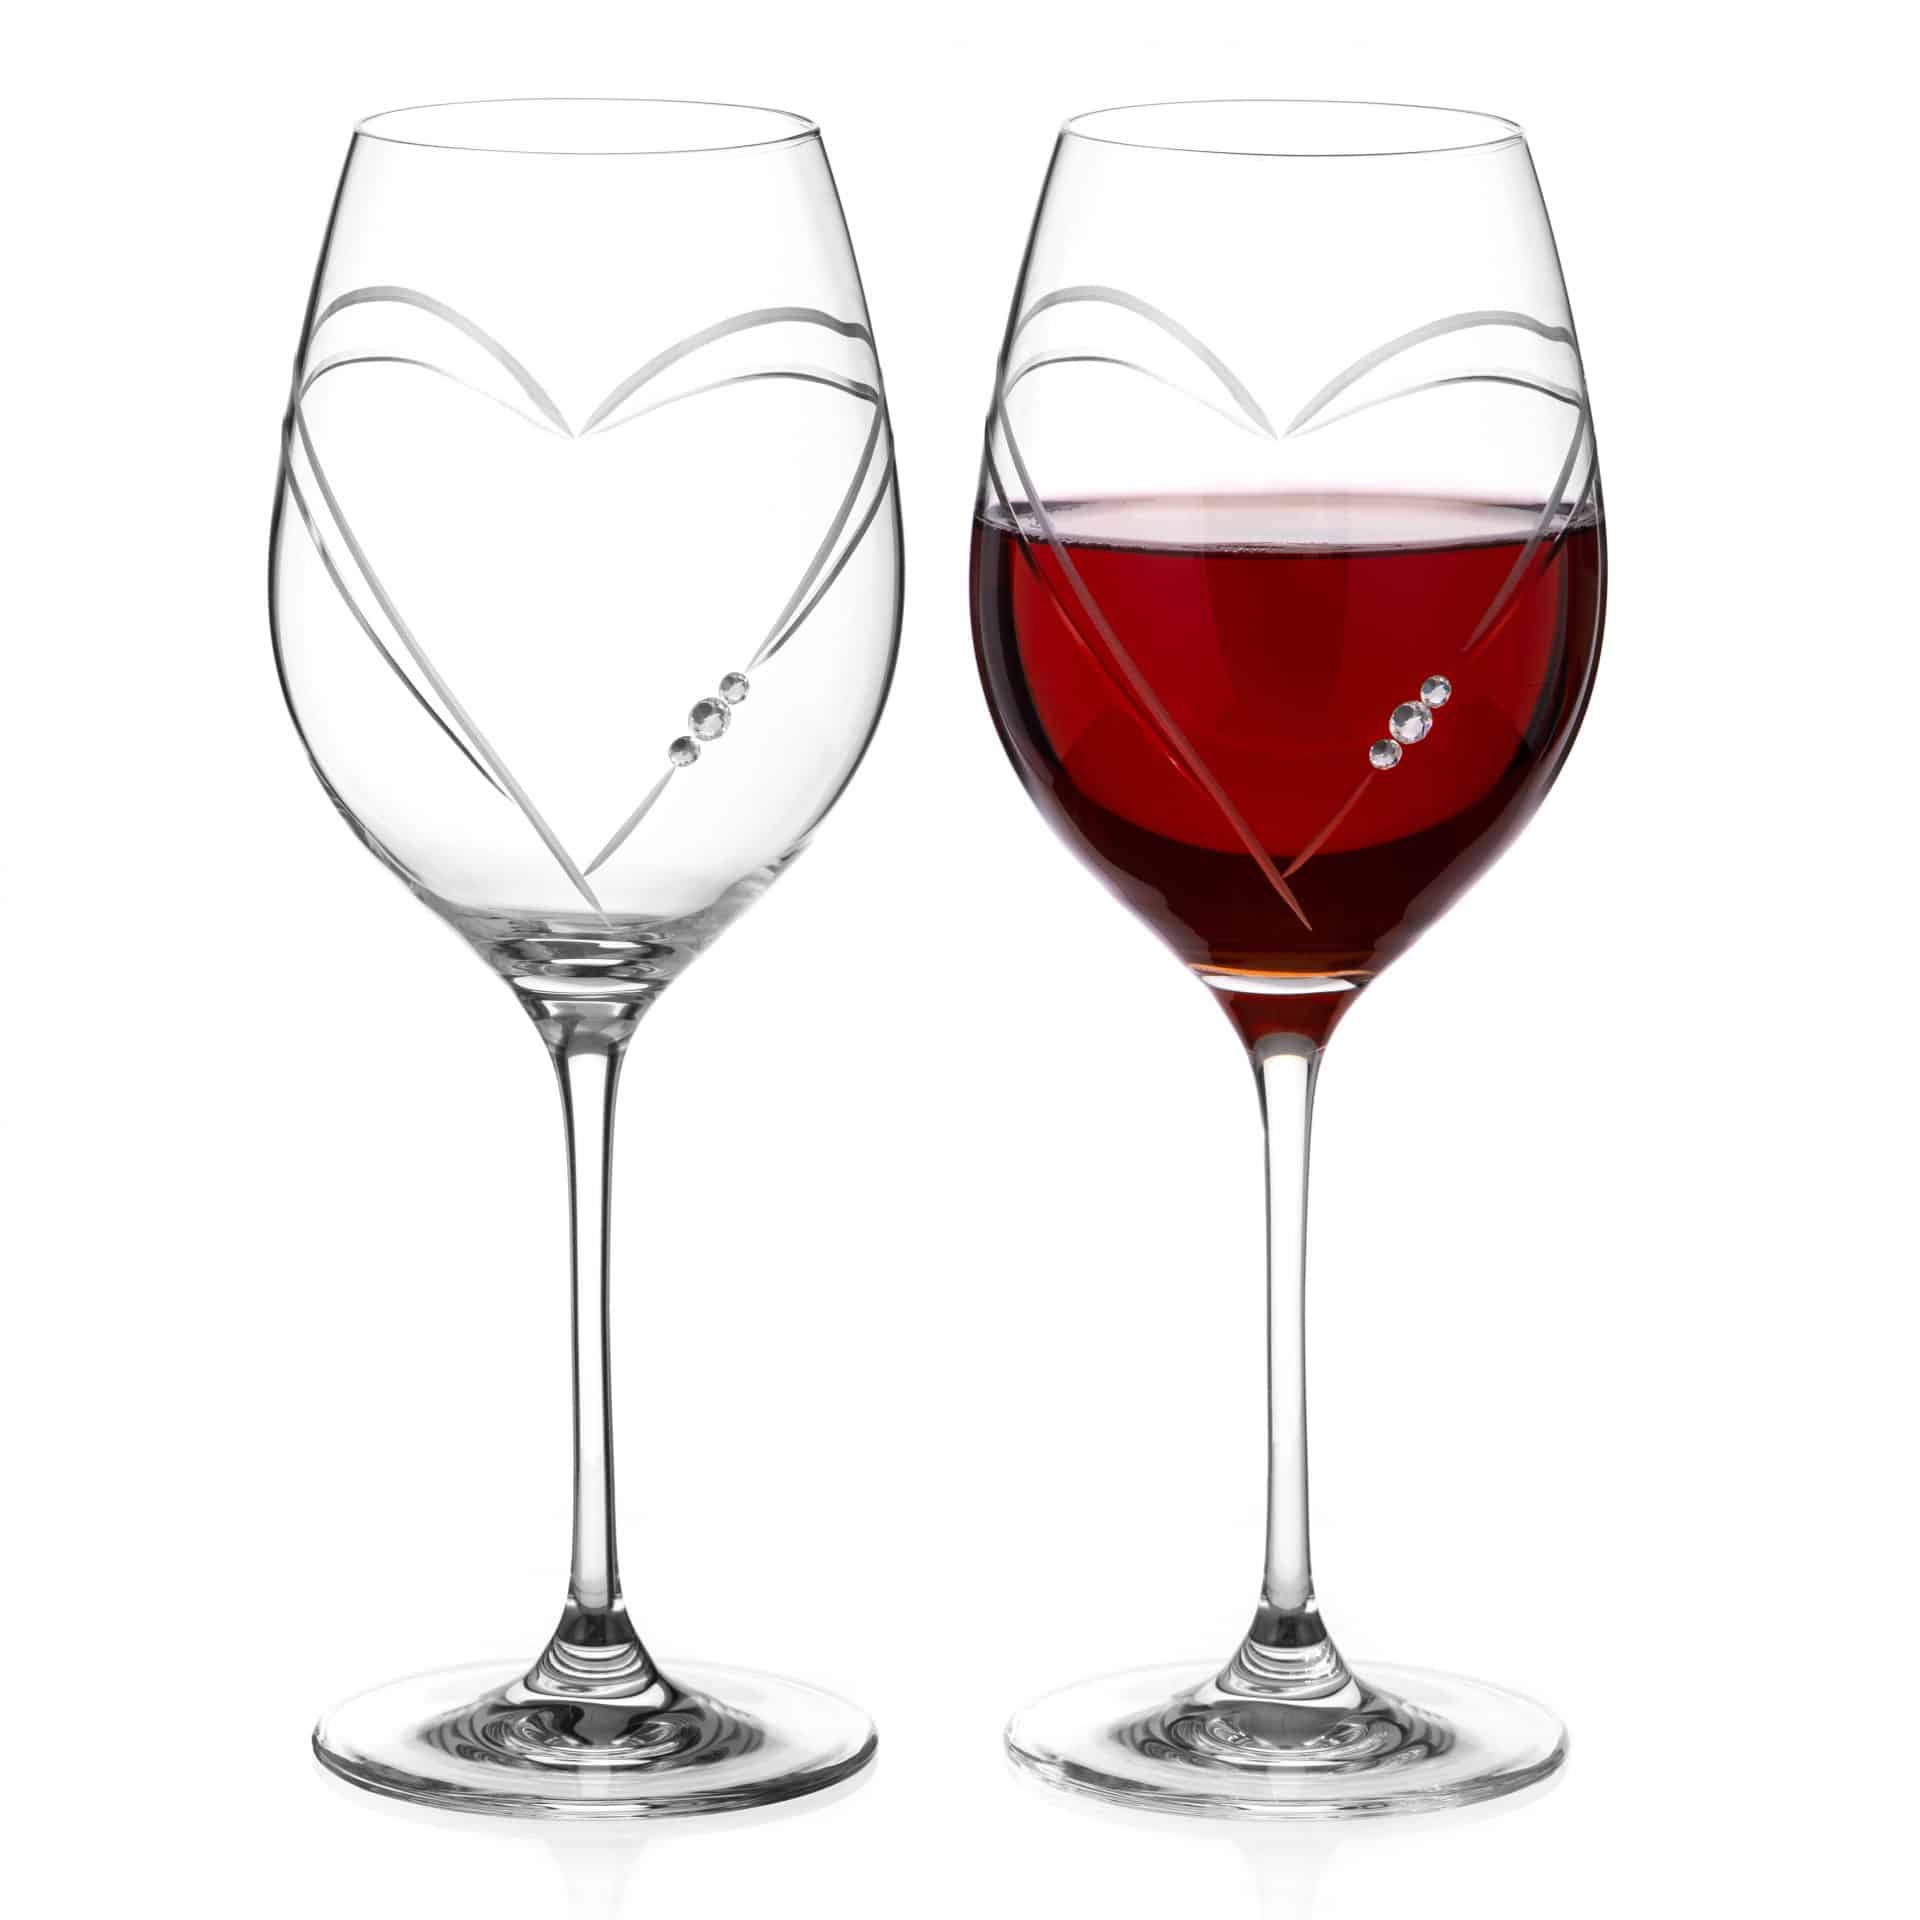 DIAMANTE Swarovski Red Wine Glasses Pair 'angelina' Embellished